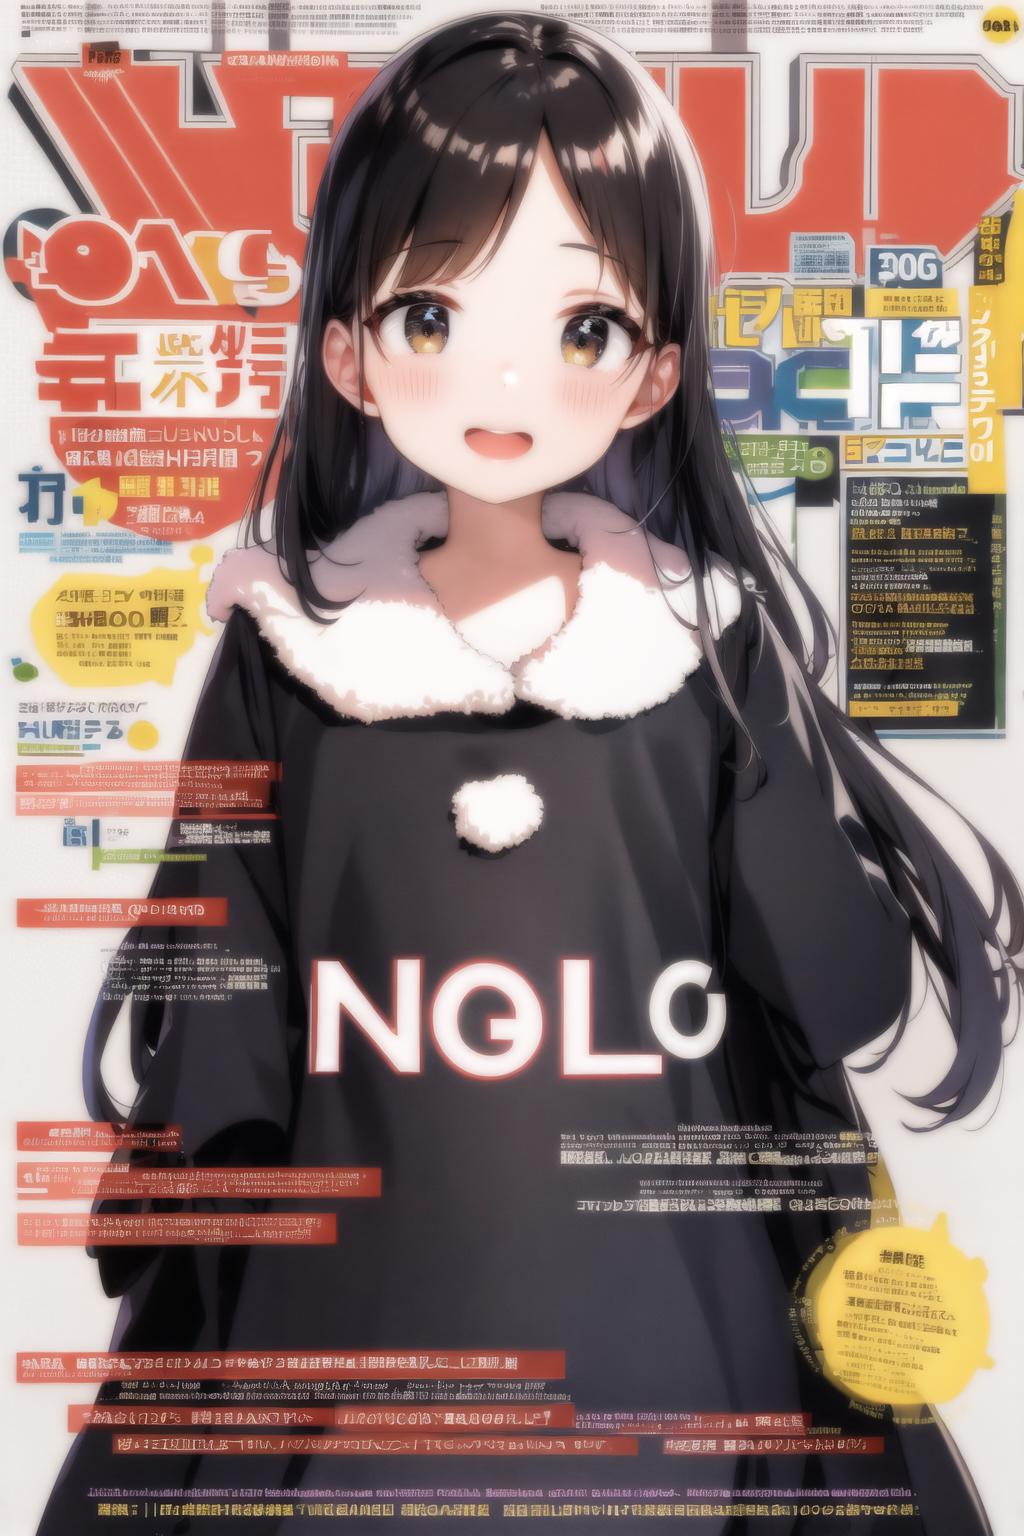 Anime Summit Manga Magazine 2023 - 11x14 Satin Poster (210gsm)